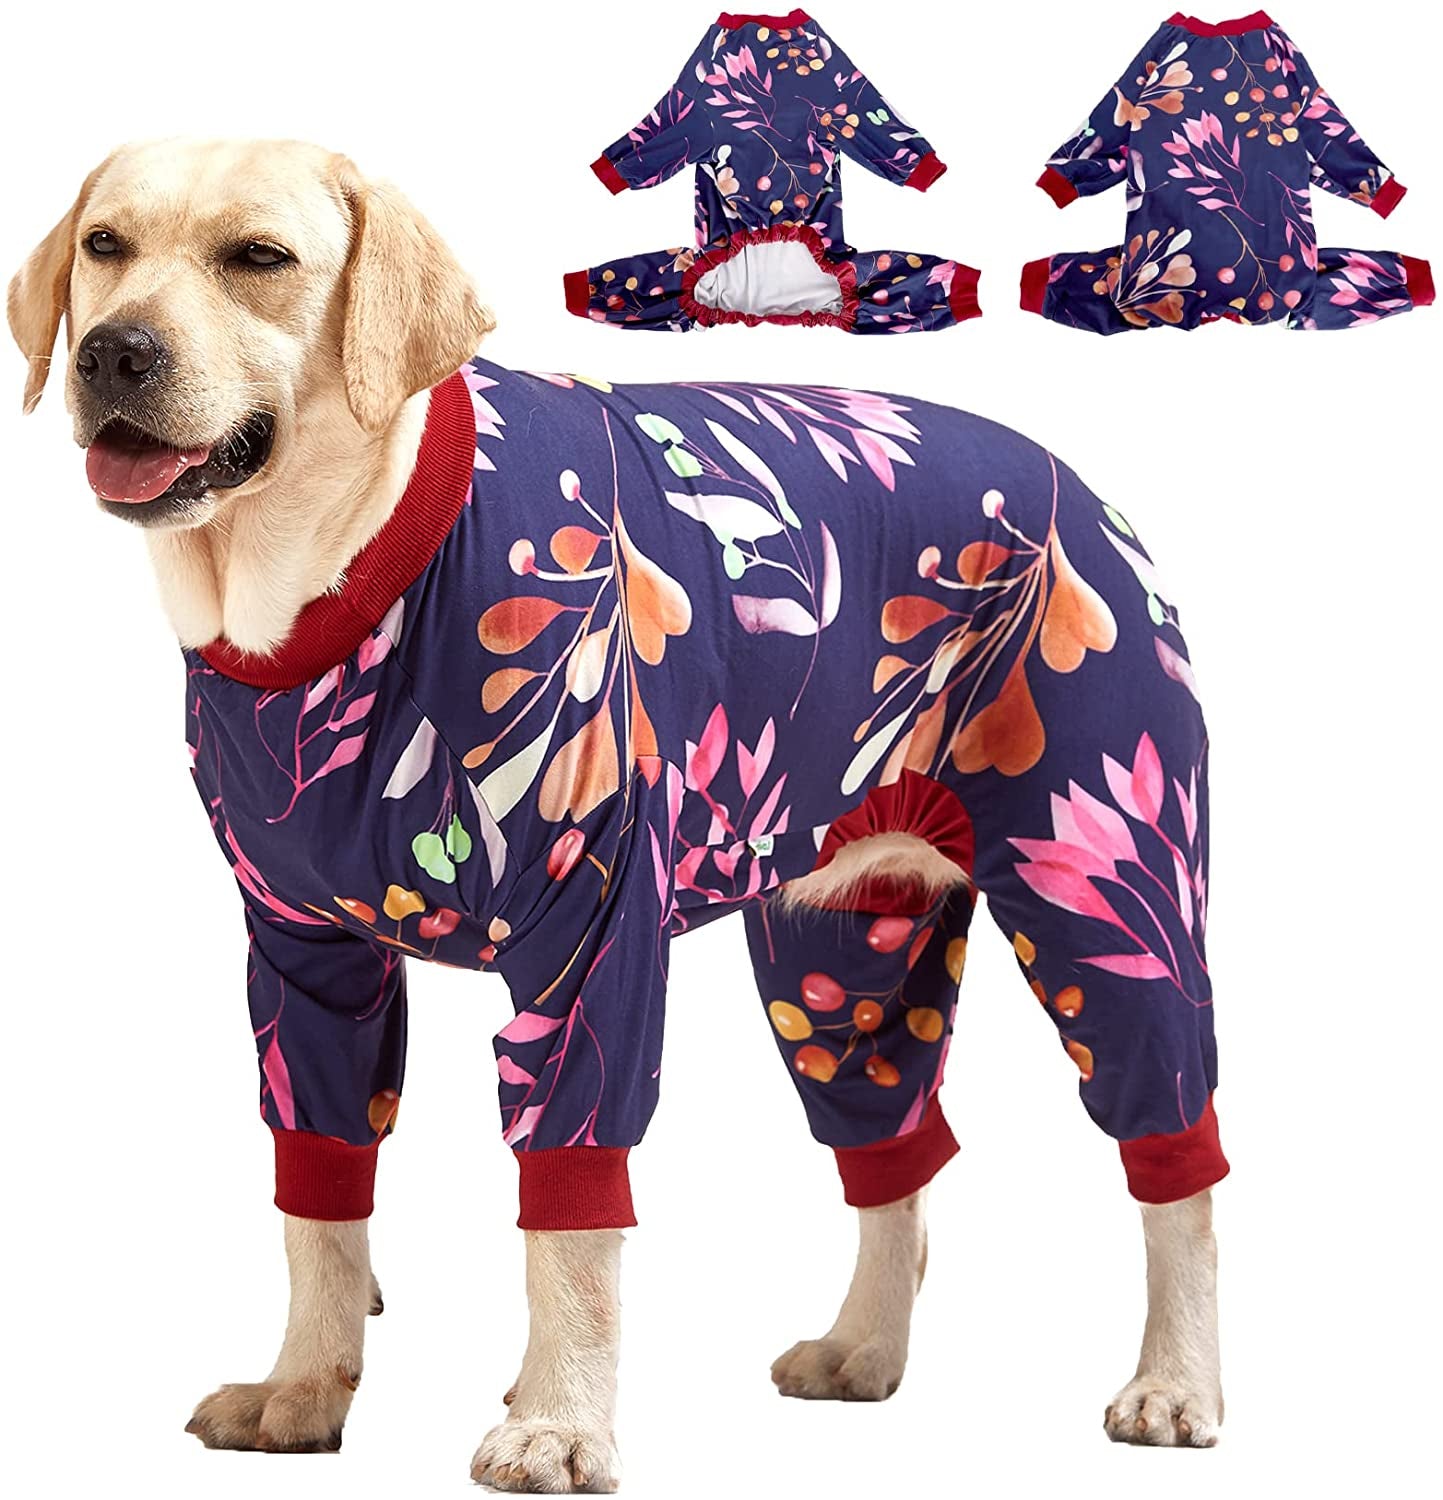 Lovinpet Big Dog Pajamas, Navy Berries Print, Large Dog Jammies, Pitbull Dog Pj'S, Lightweight Pullover Dog Pajamas, Full Coverage Dog Pjs /2XL Animals & Pet Supplies > Pet Supplies > Dog Supplies > Dog Apparel LovinPet Multi-colored X-Large 